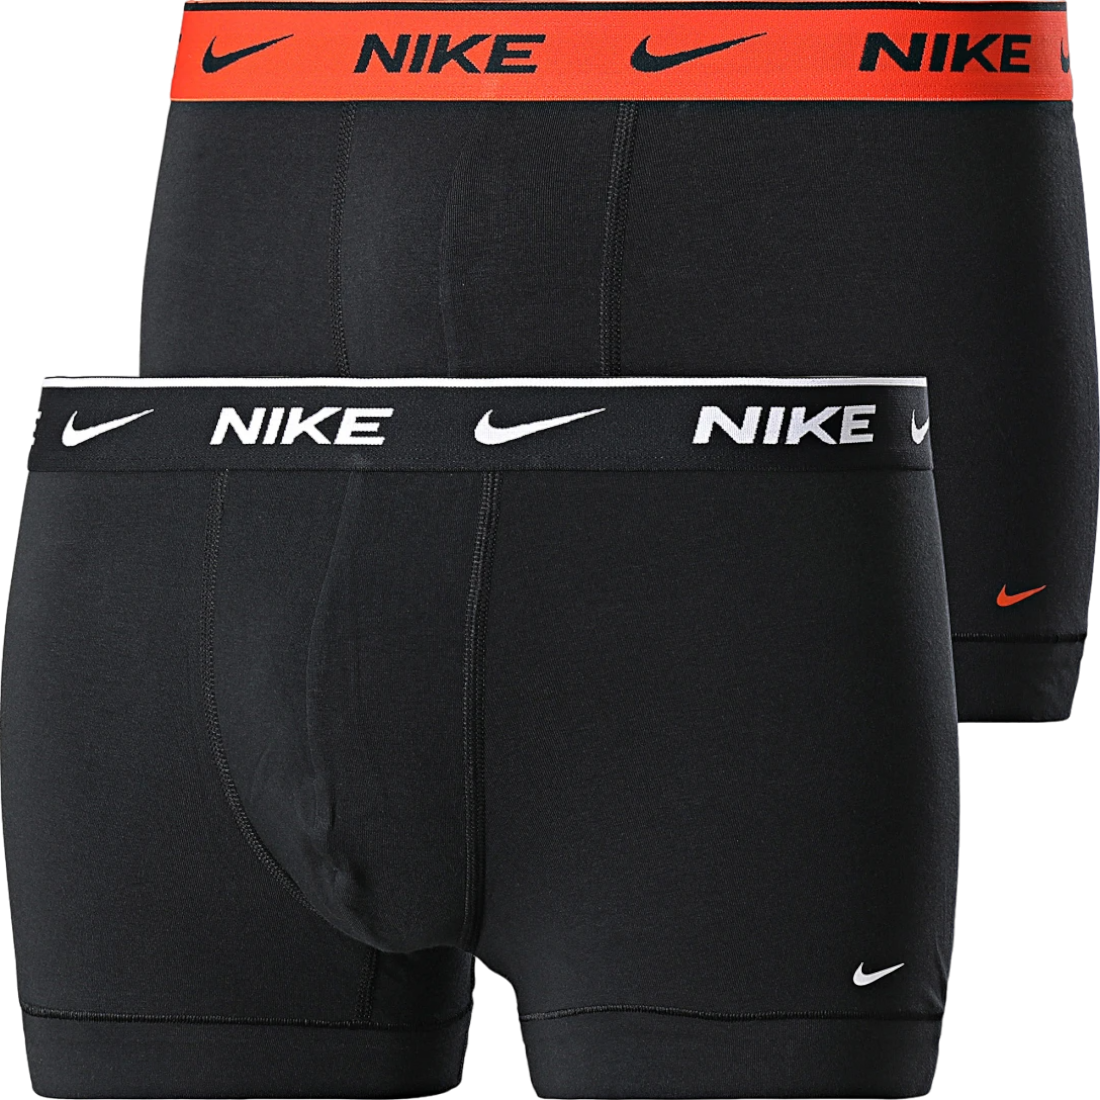 Nike Cotton Trunk Boxers